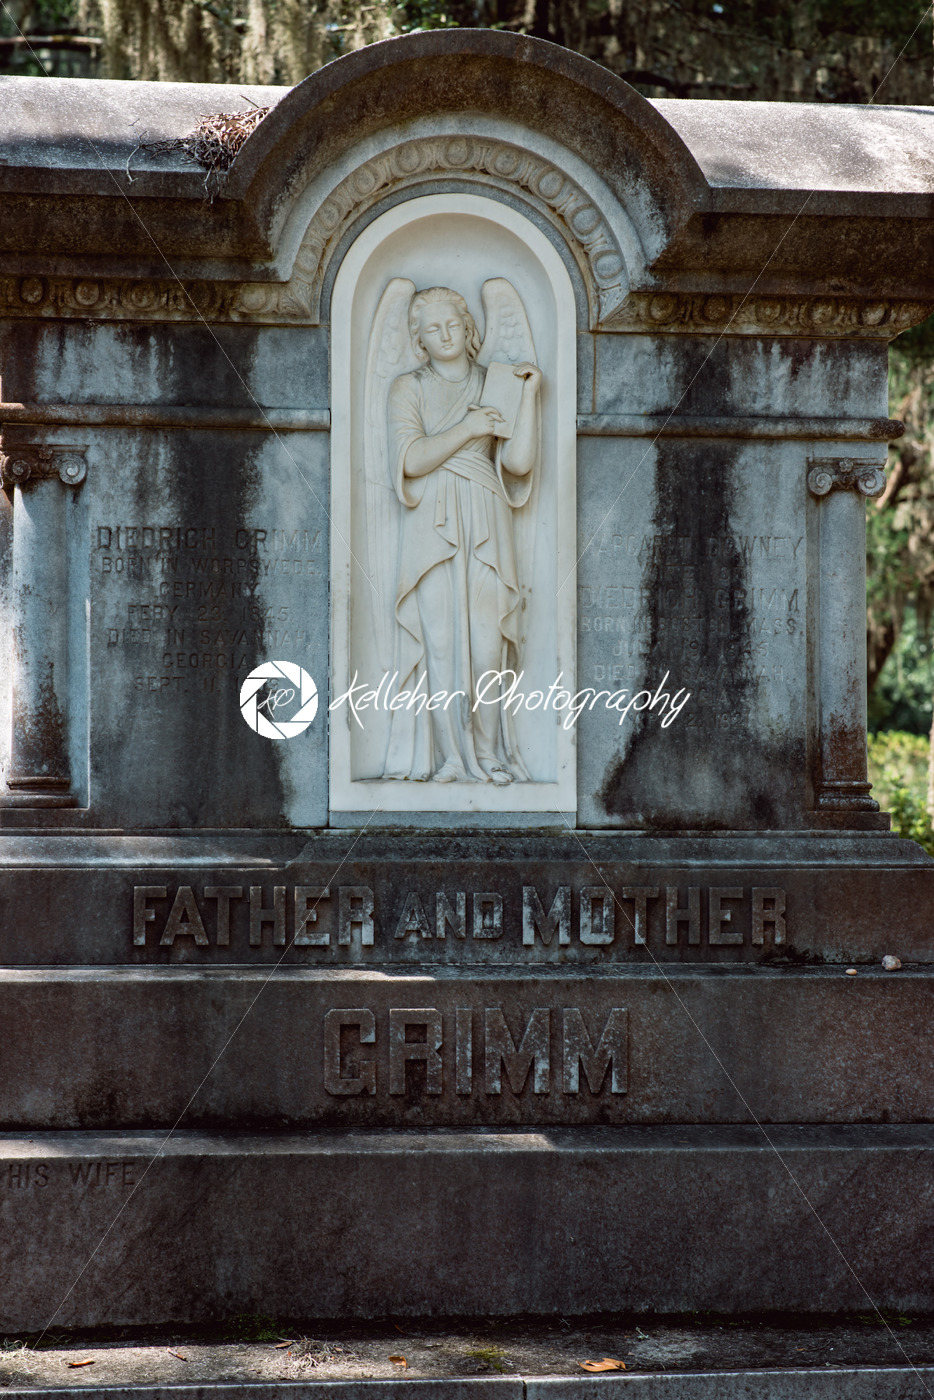 Father Mother Grimm Cemetery Statuary Statue Bonaventure Cemetery Savannah Georgia - Kelleher Photography Store